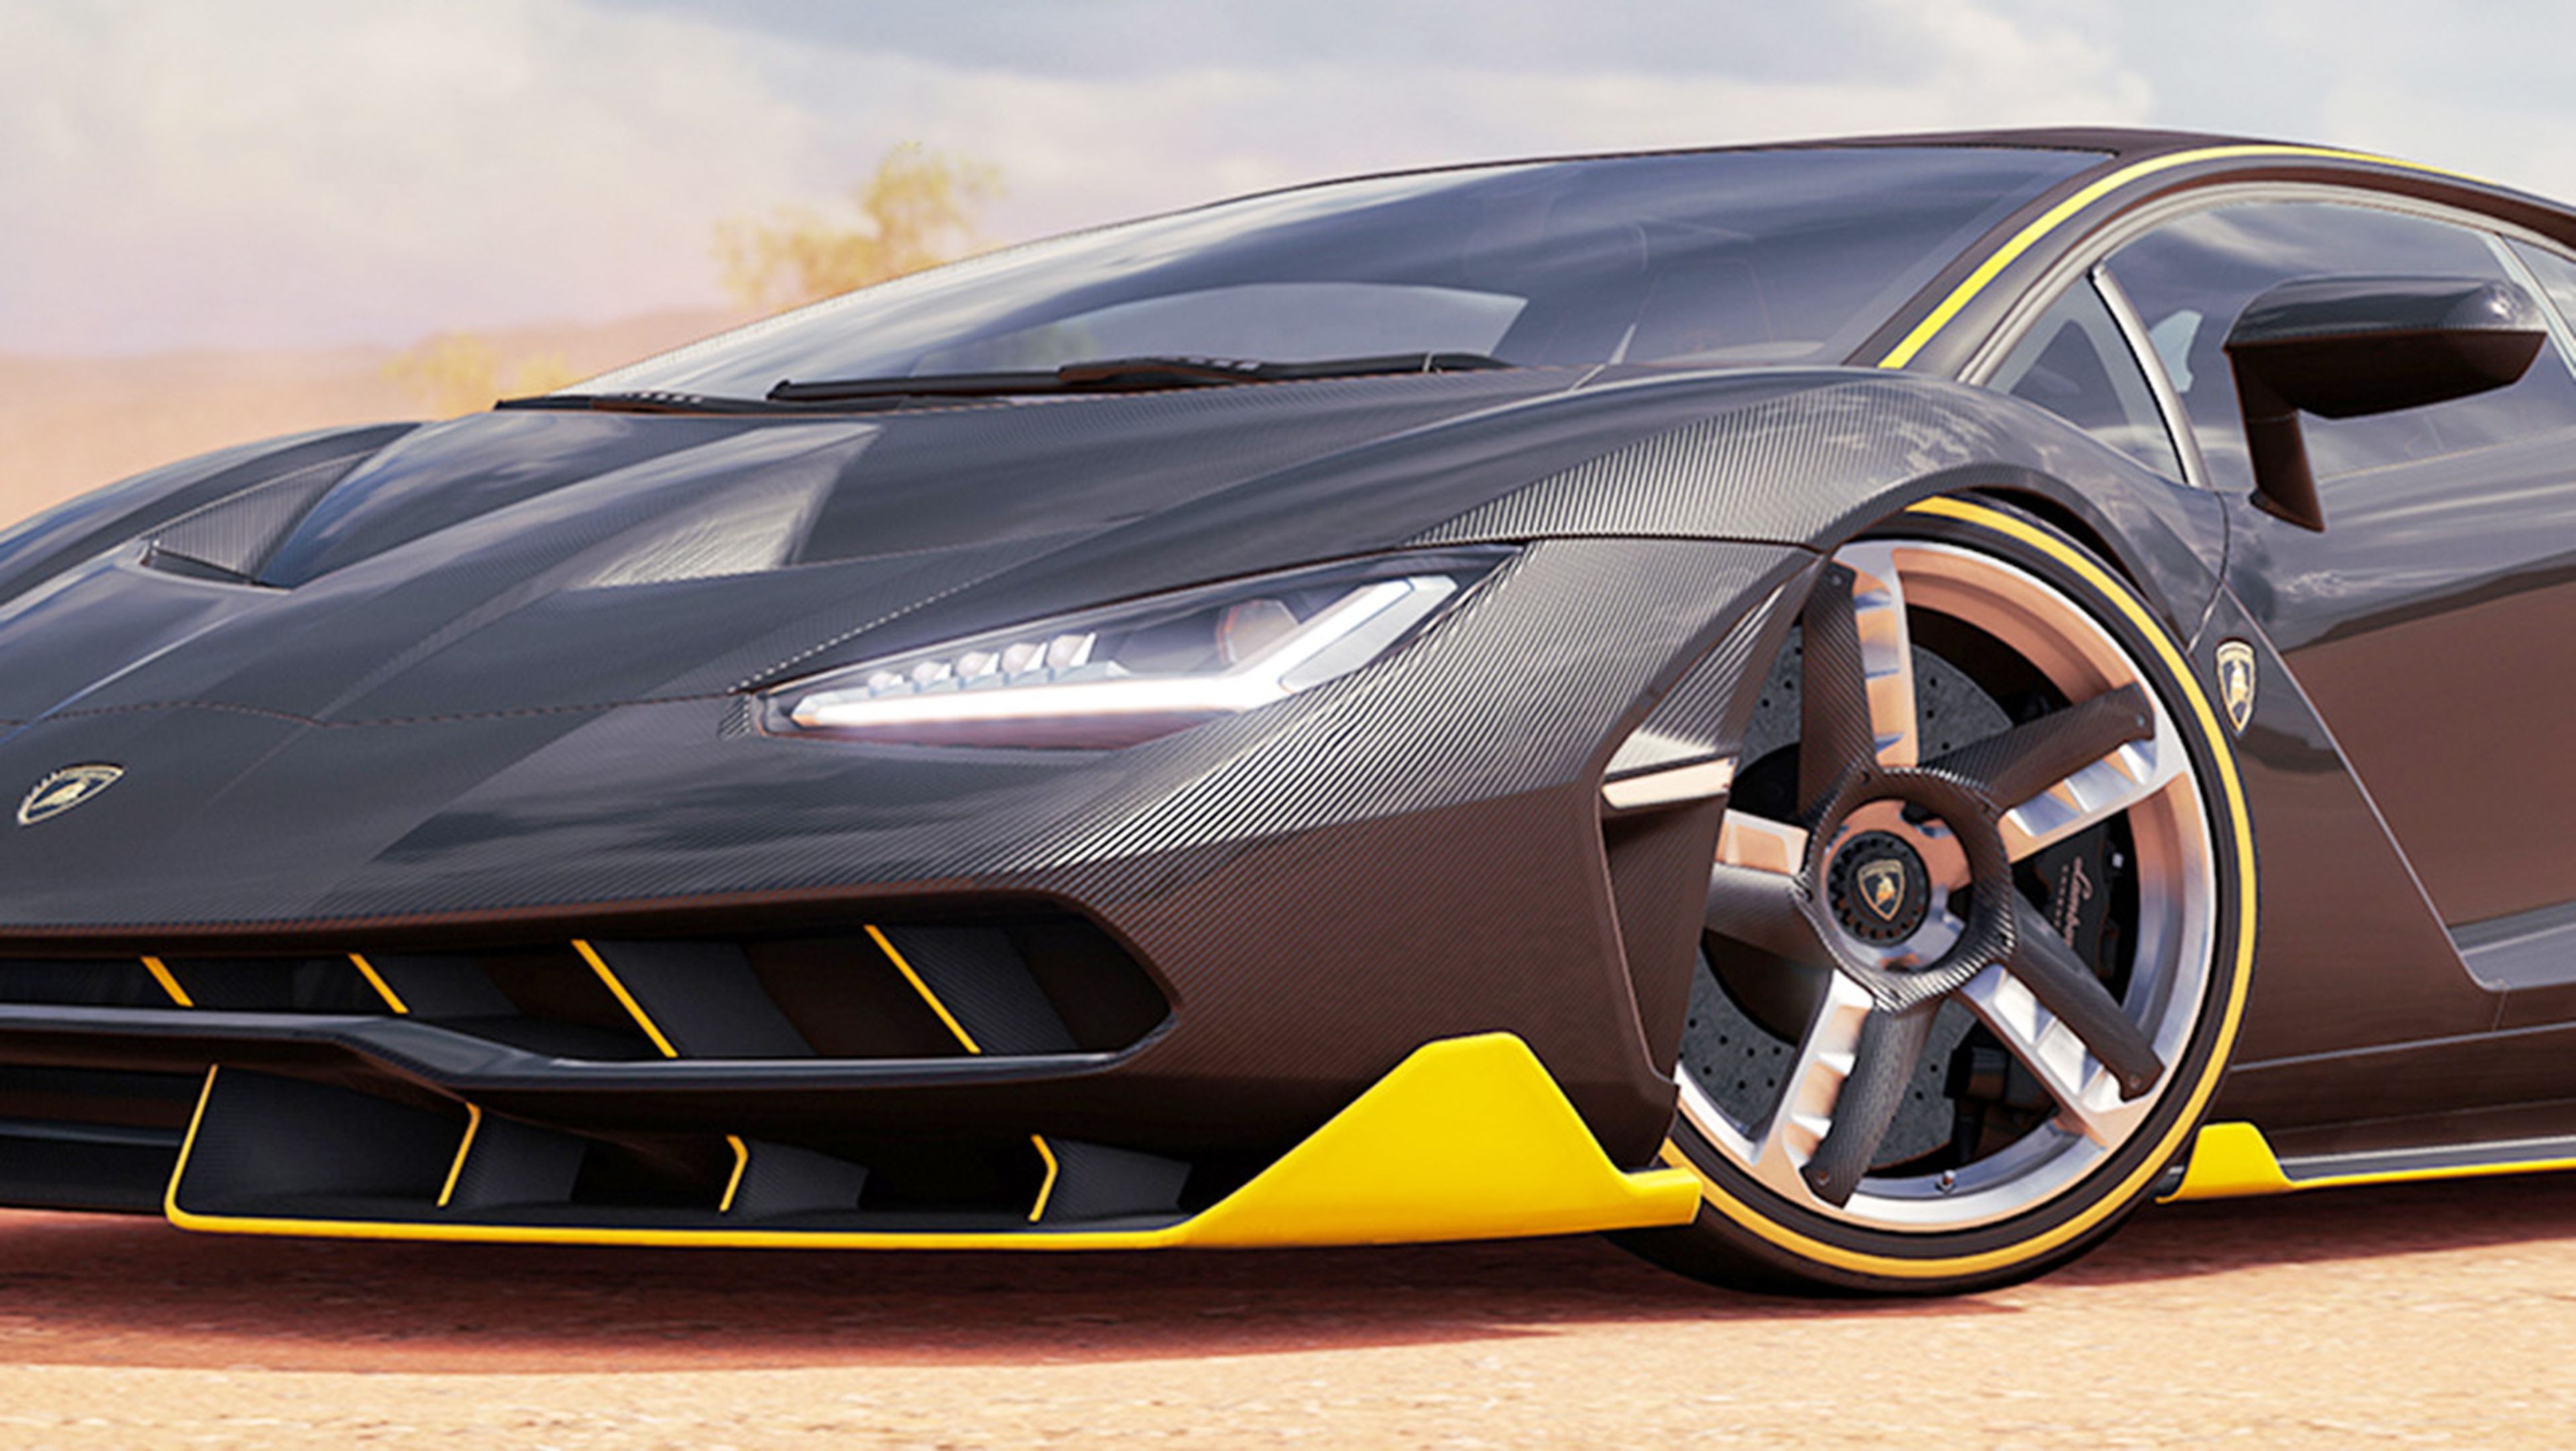 Filtrado un nuevo Lamborghini en Forza Horizon 3